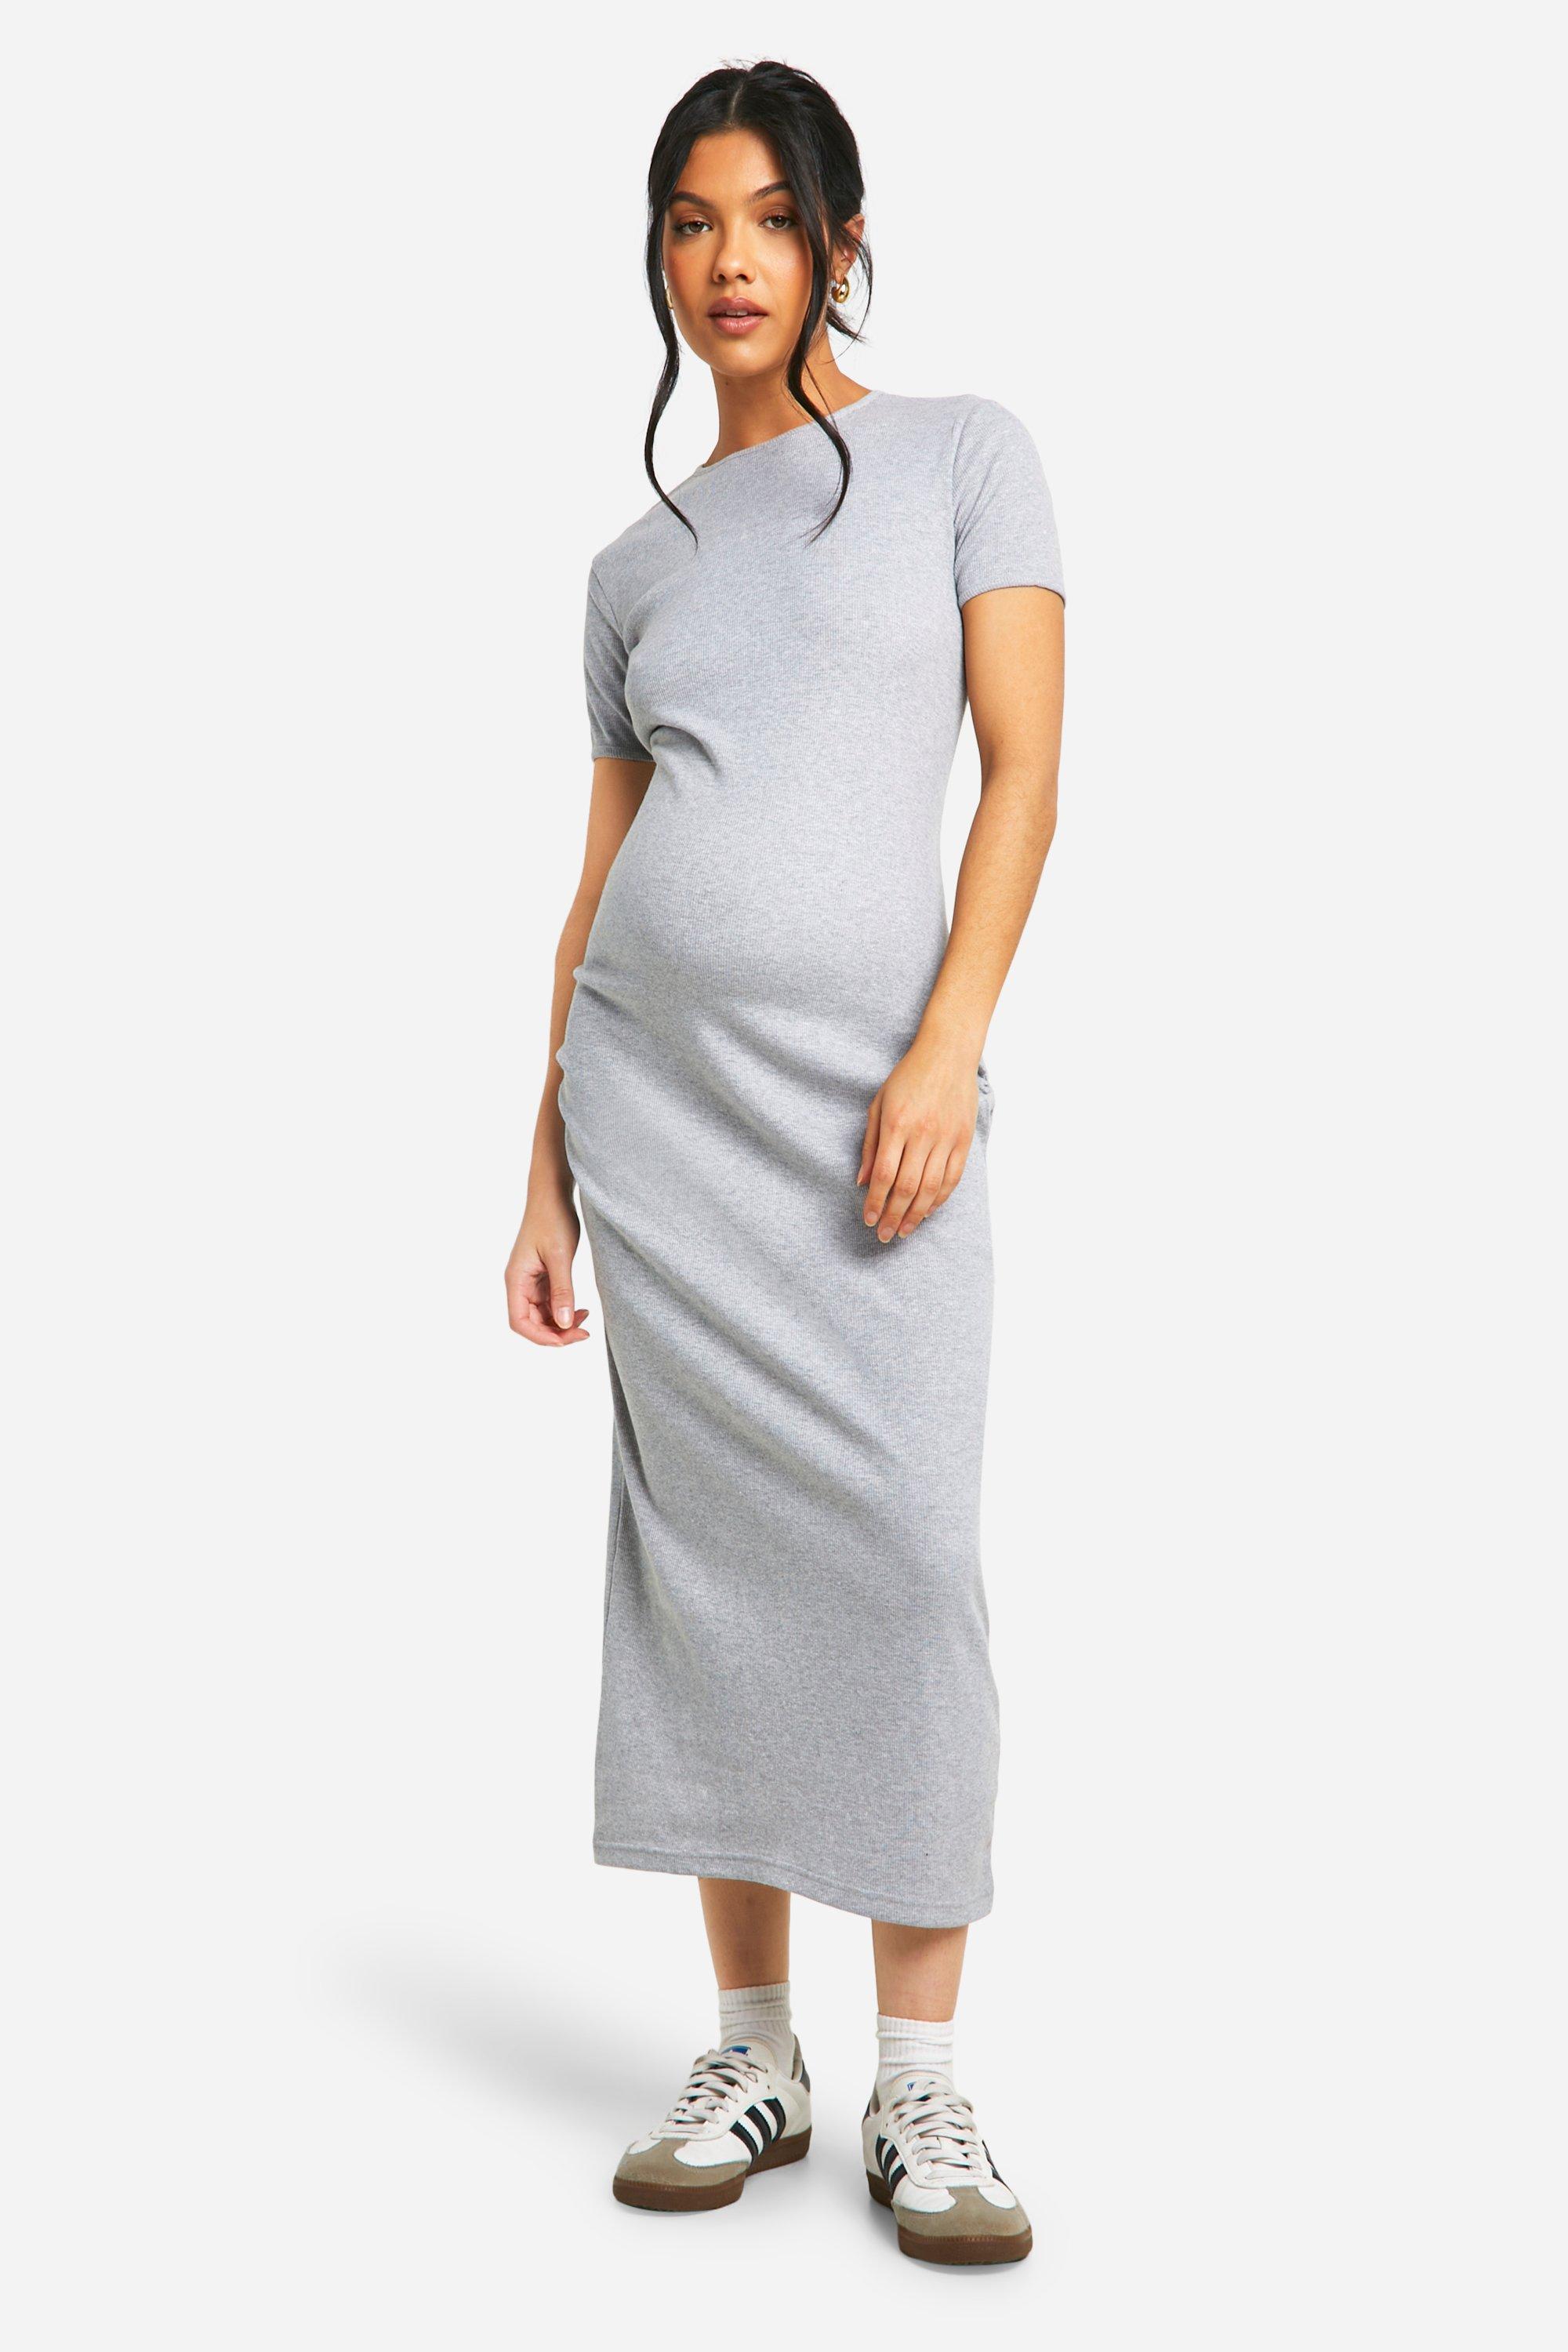 Boohoo Maternity Ribbed Cap Sleeve Midaxi Dress, Grey